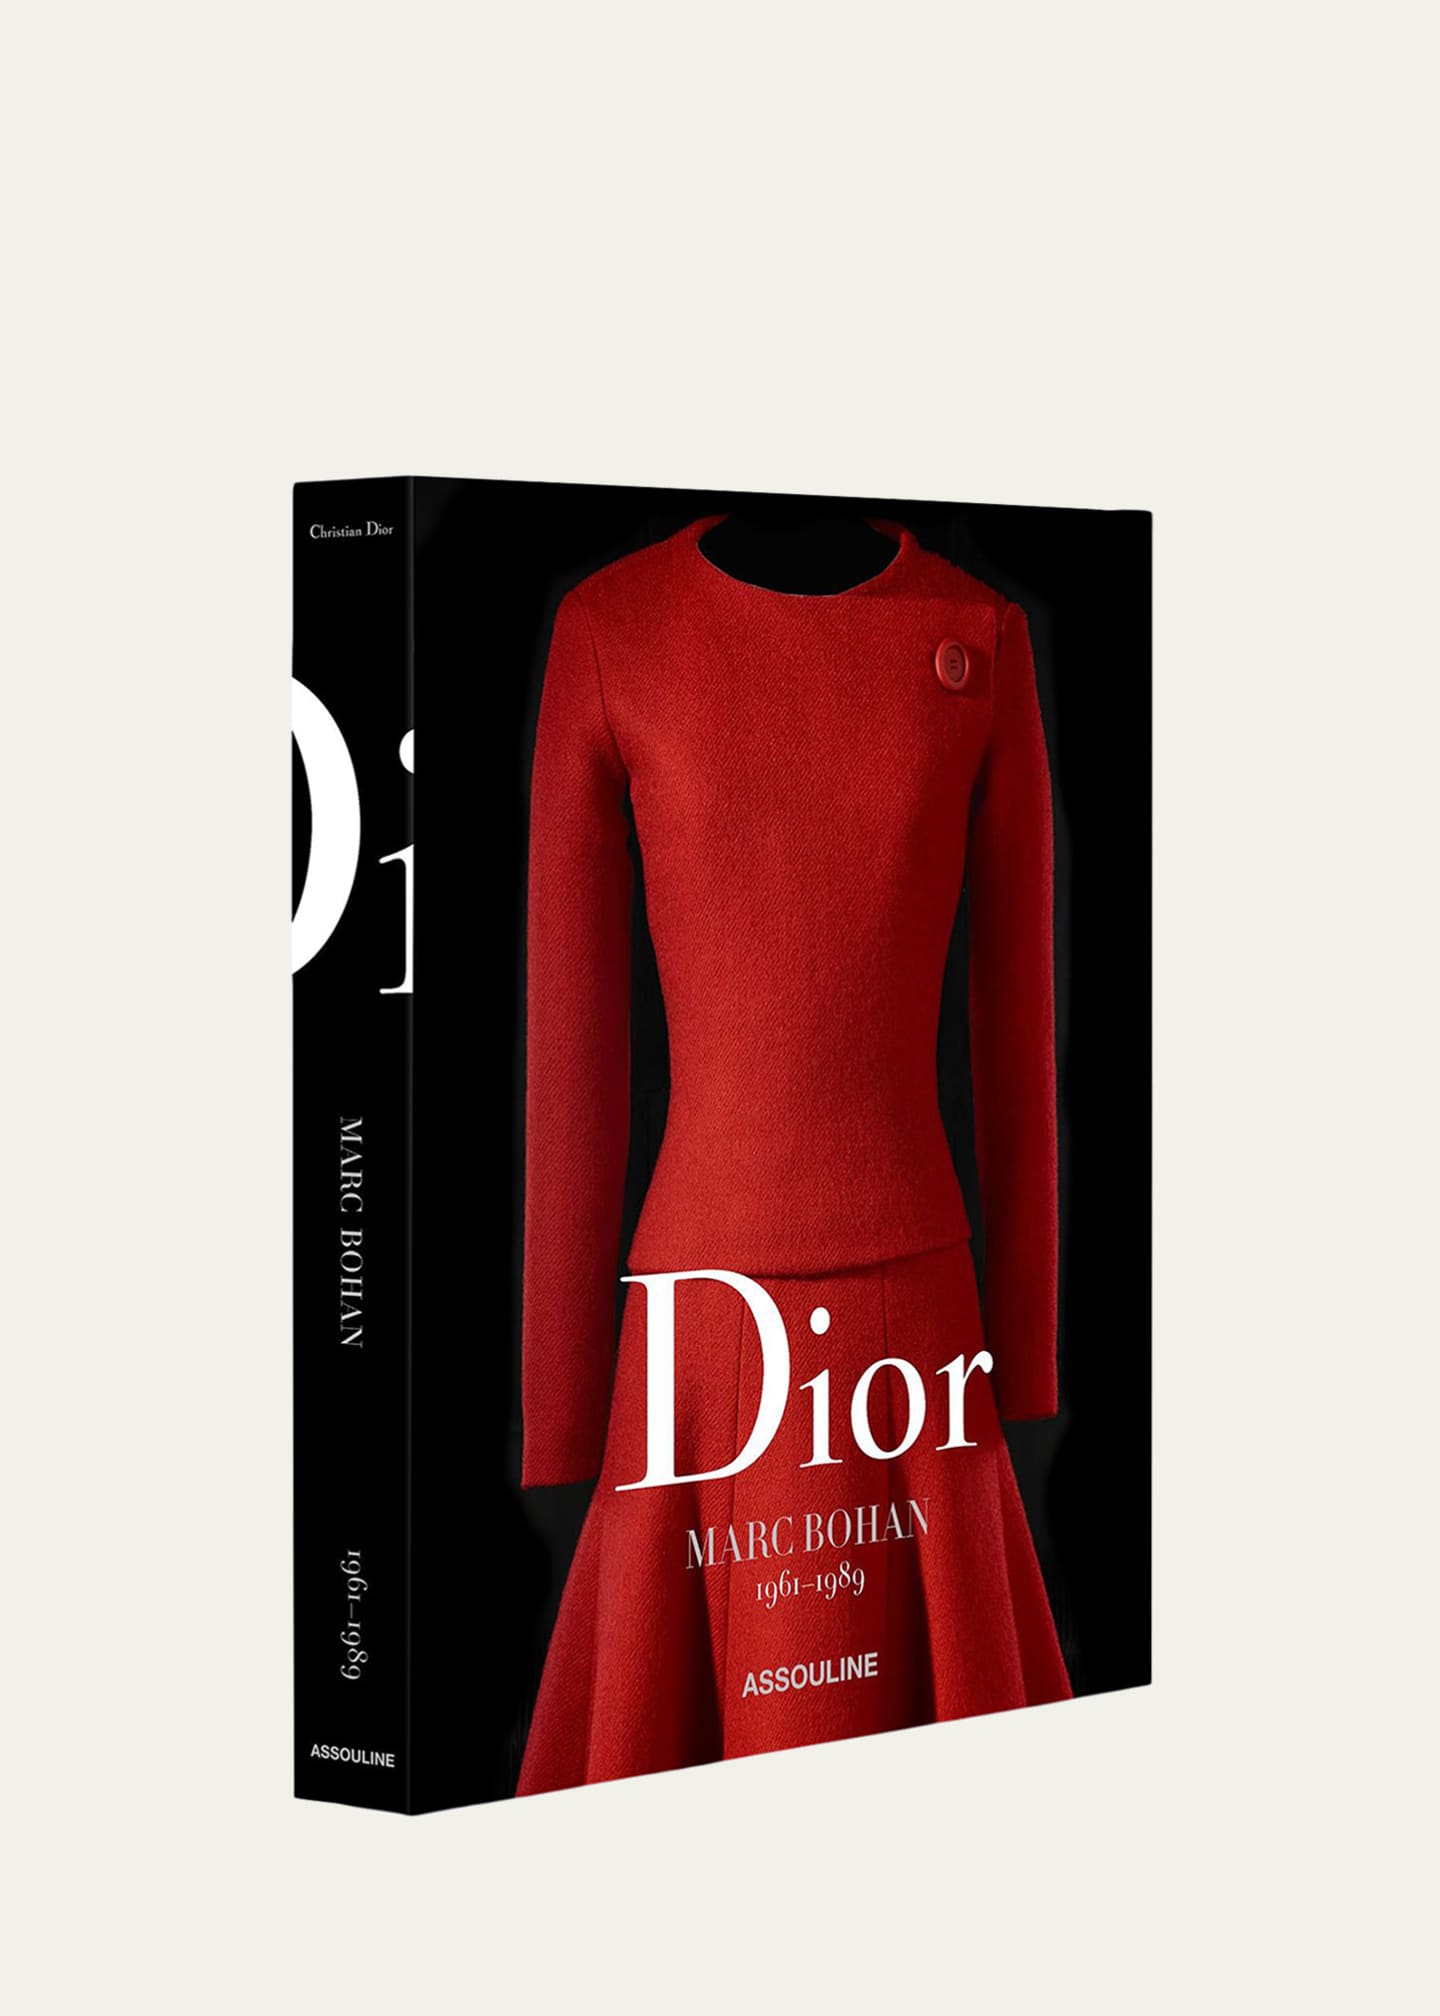 Assouline Dior Book by Marc Bohan Image 1 of 4